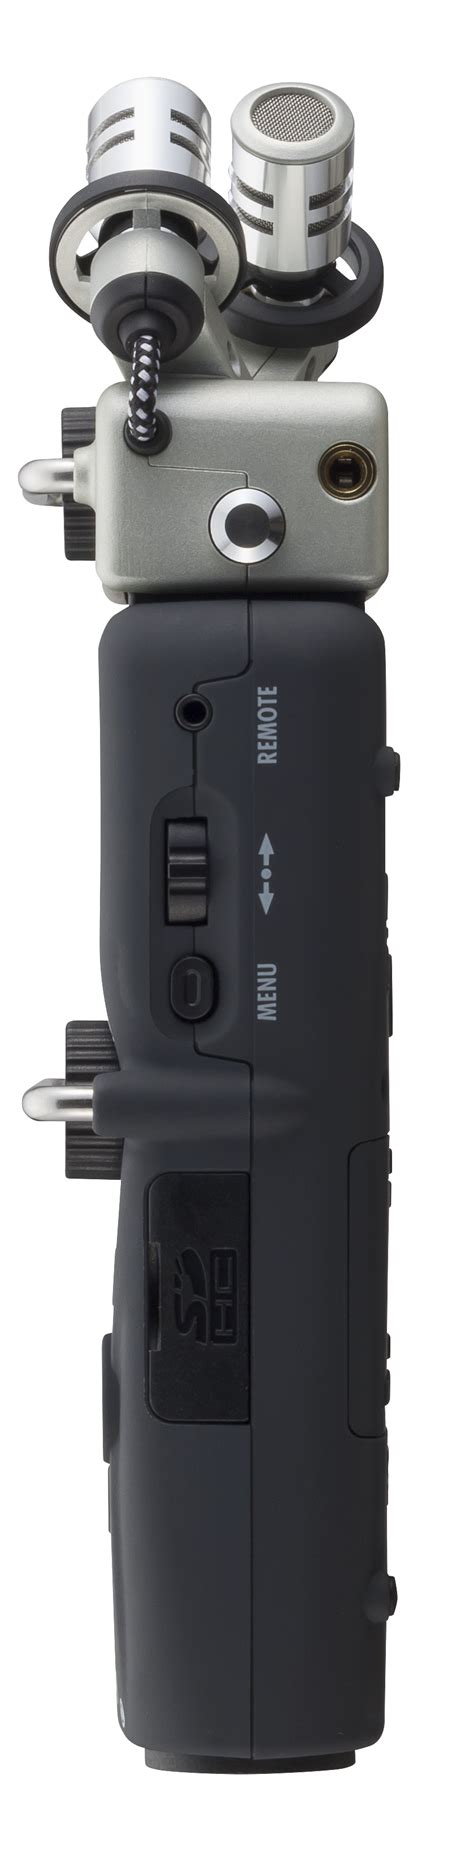 Zoom H5 Handy Recorder Zh5 Avshopca Canadas Pro Audio Video